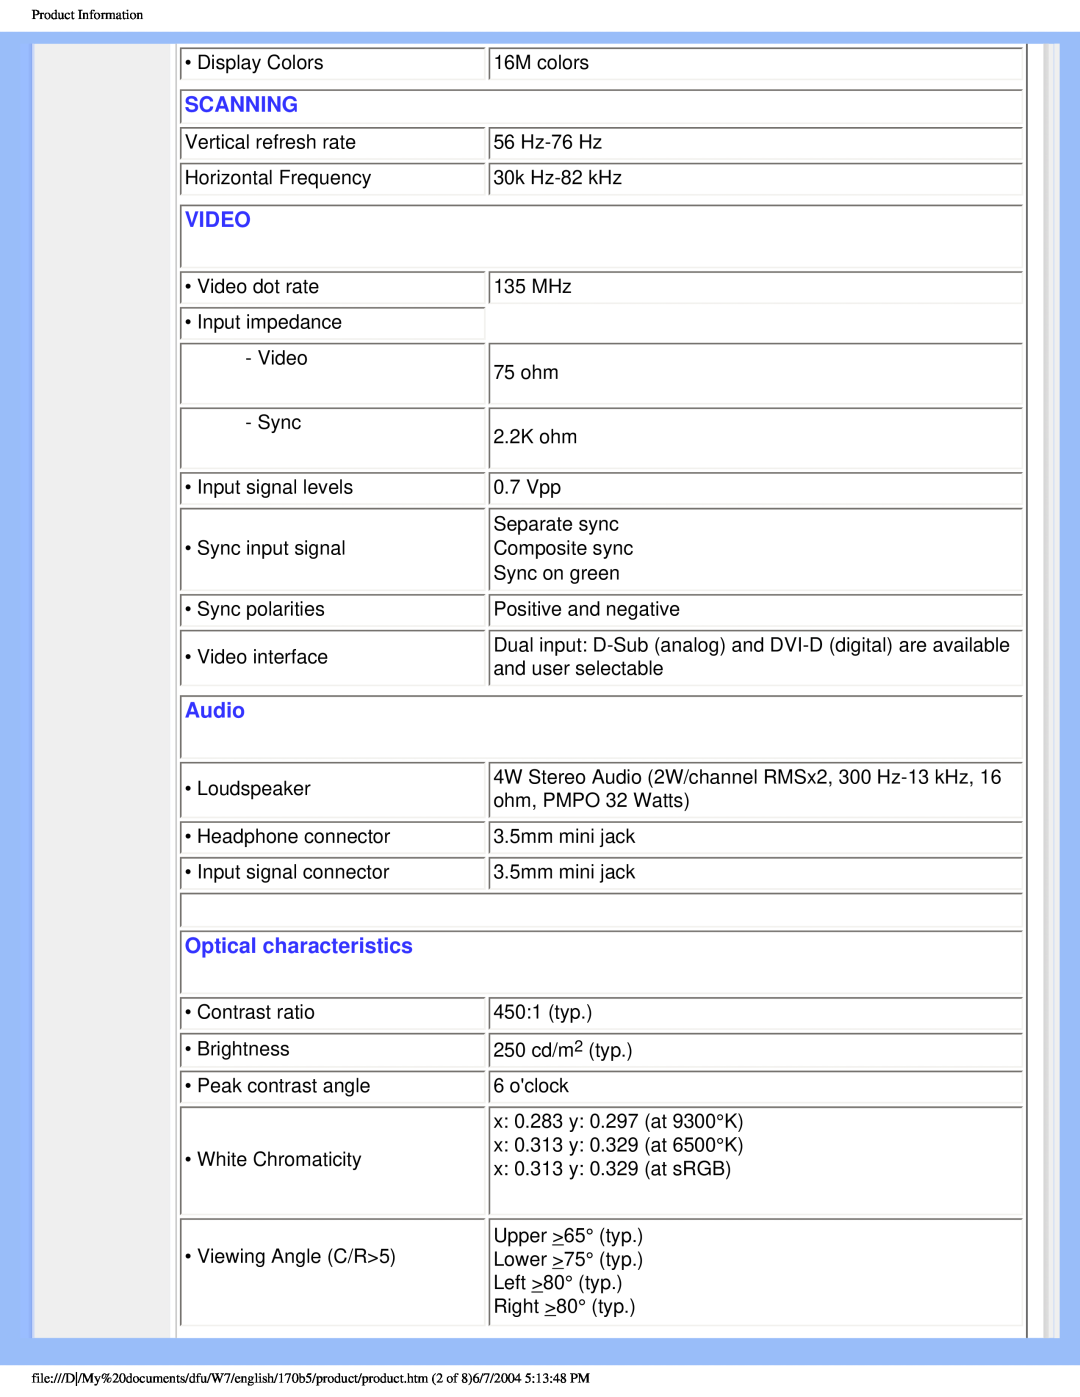 Philips 170B5 user manual Scanning, Video, Audio, Optical characteristics 